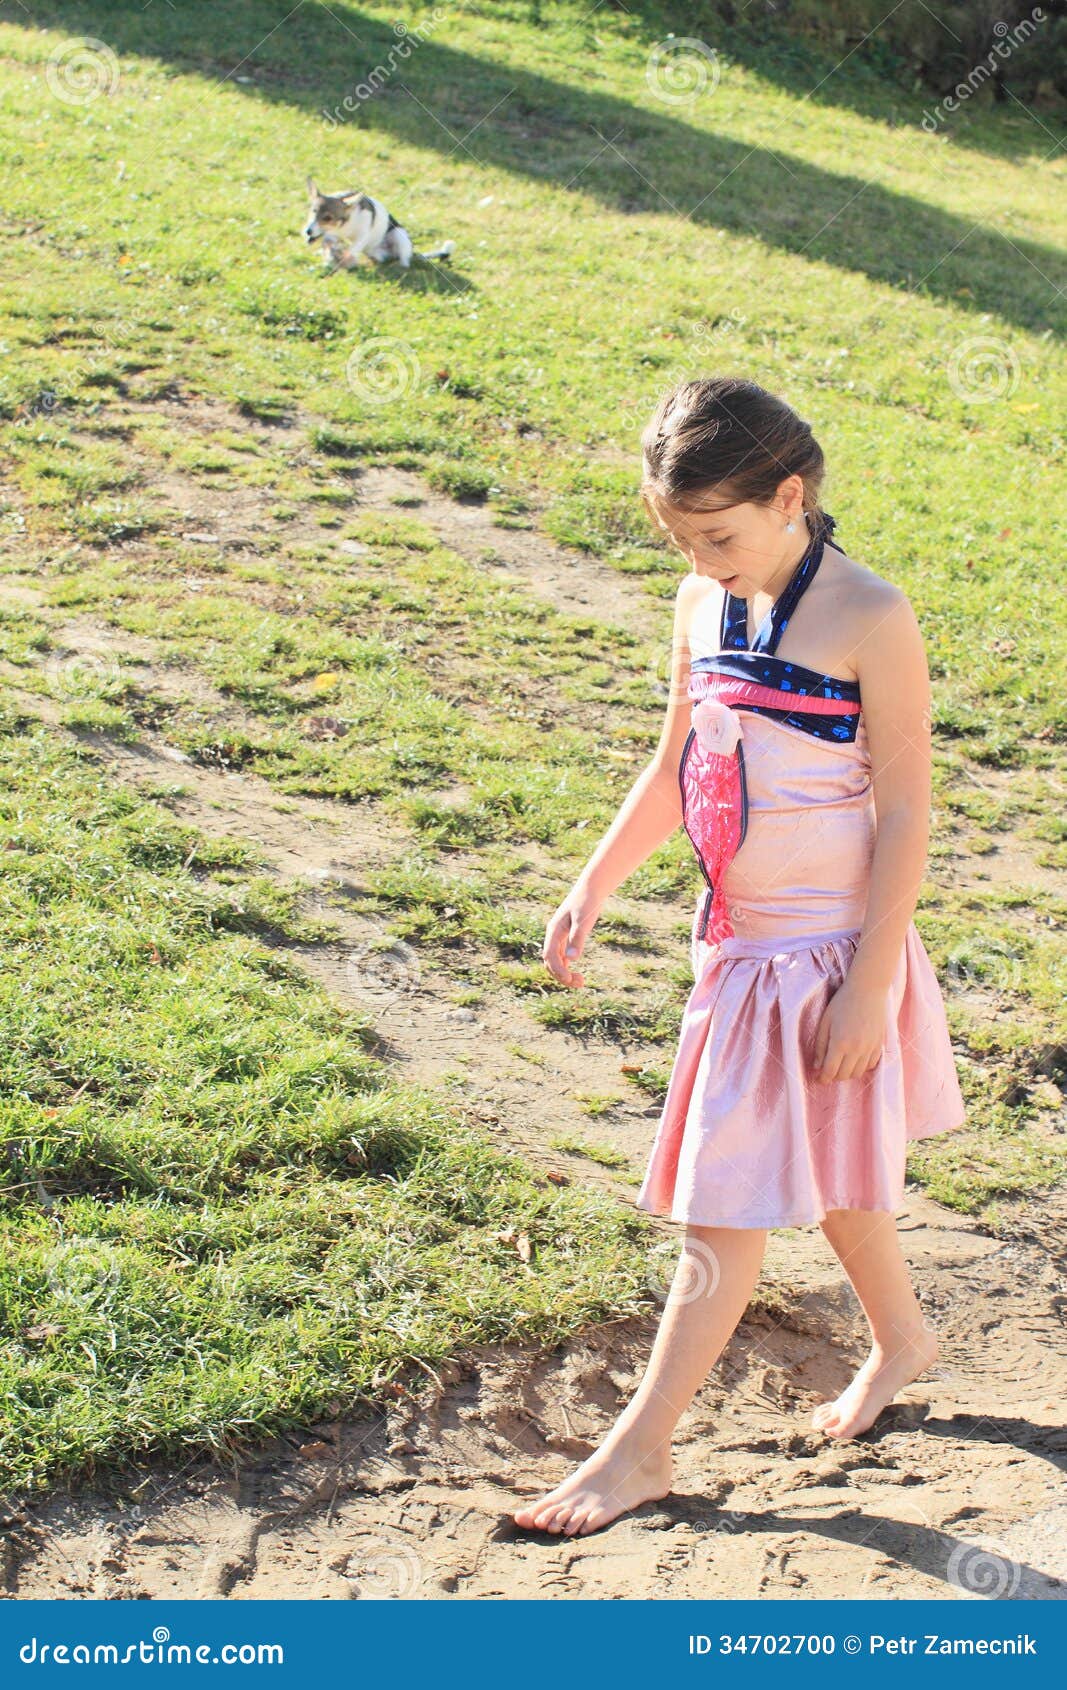 https://thumbs.dreamstime.com/z/girl-walking-mud-little-kid-barefoot-pink-dress-muddy-drying-ground-dog-meadow-behind-34702700.jpg